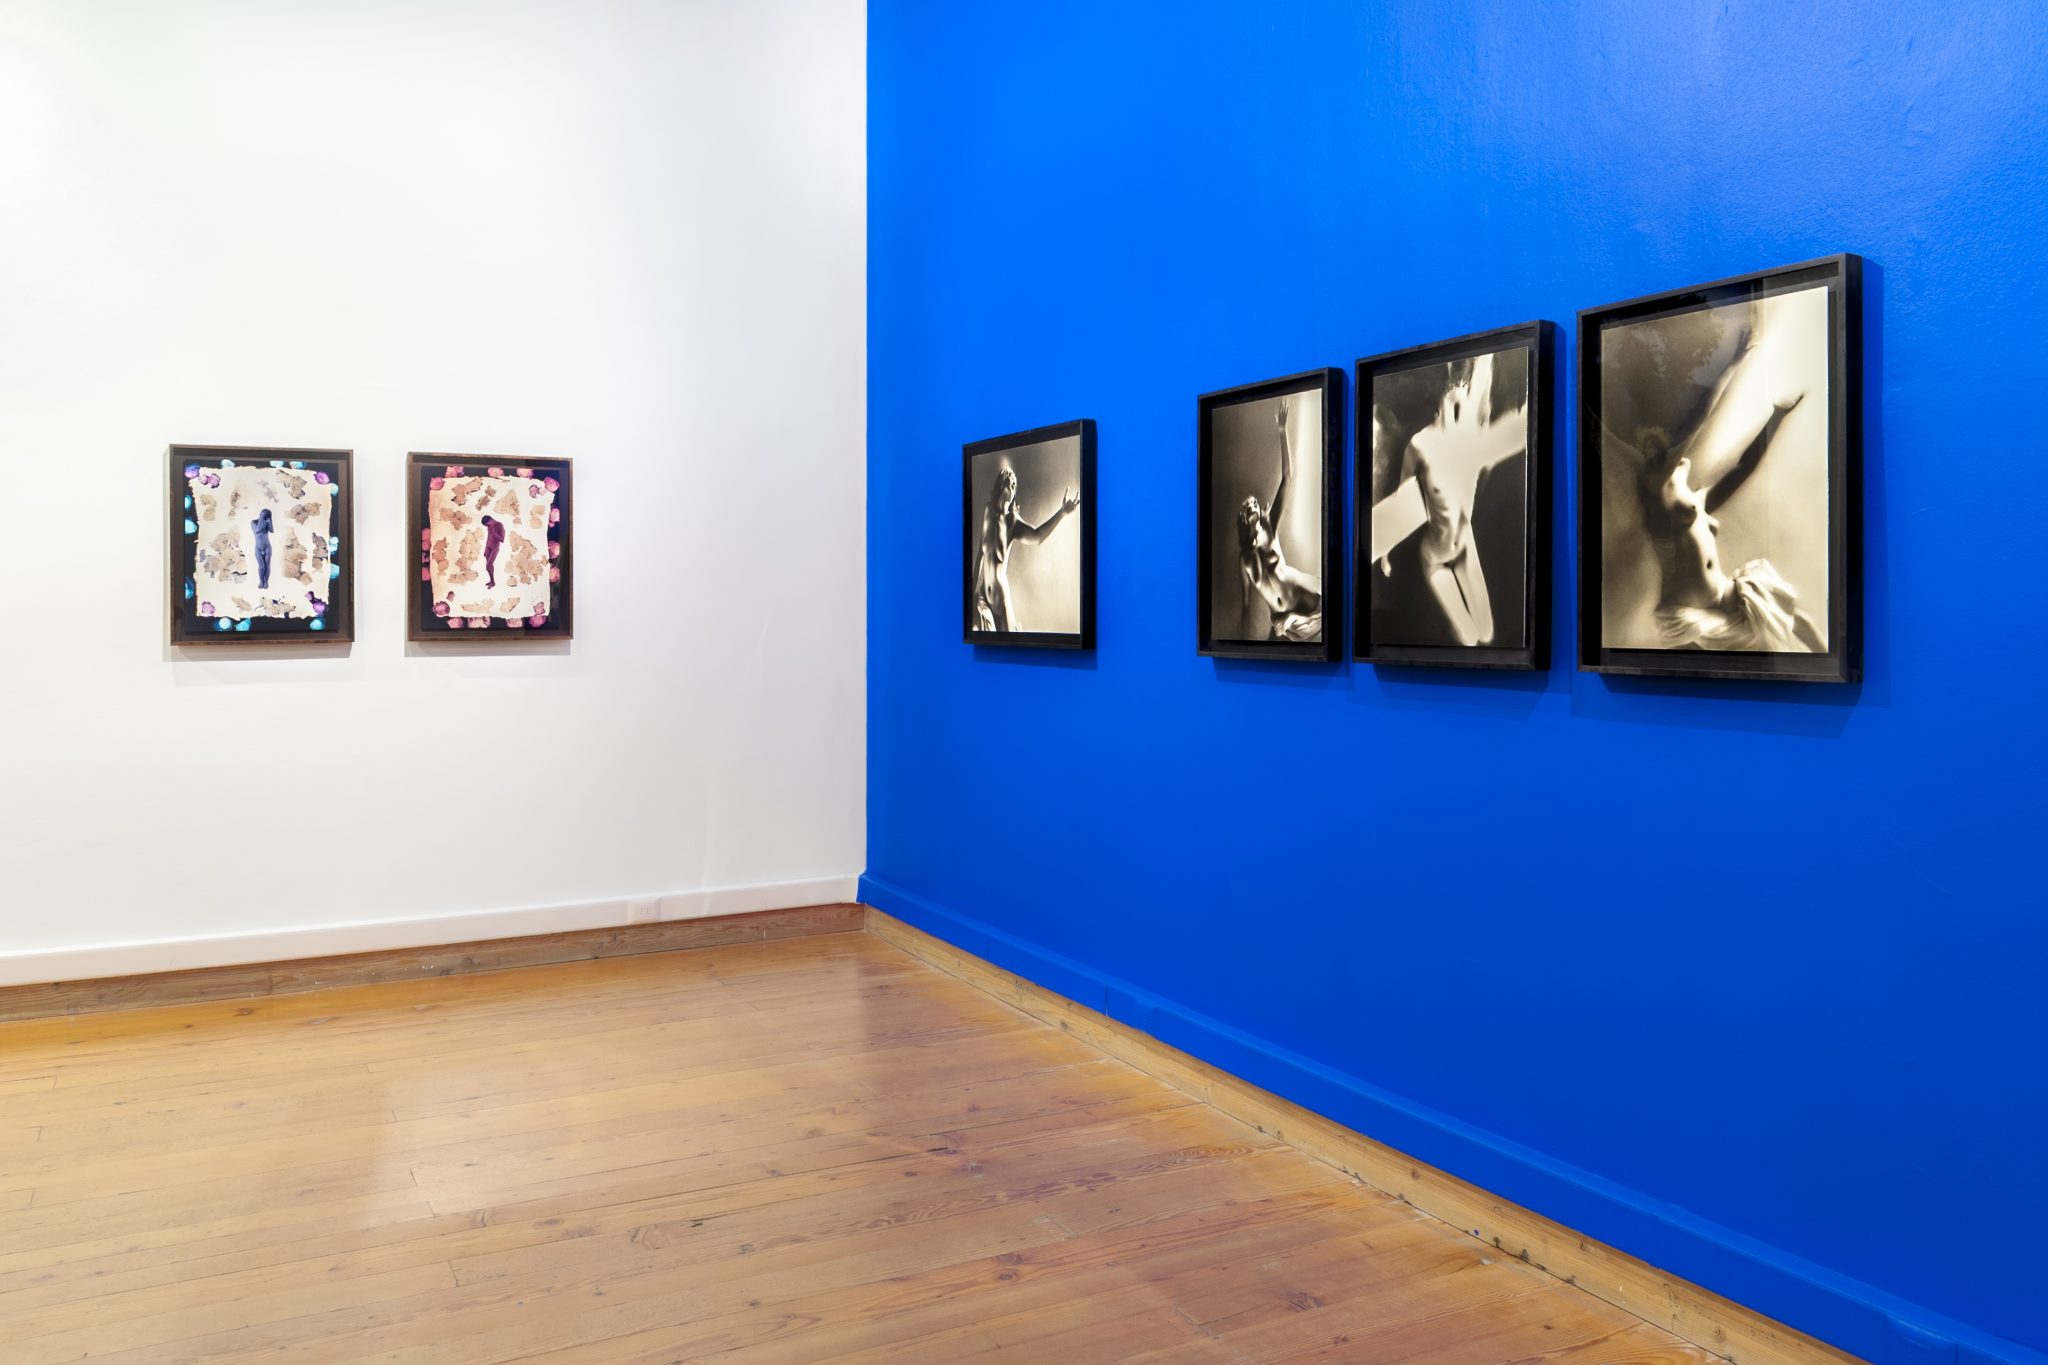 David LaChapelle | MUSEO DE ARTE CONTEMPORÁNEO, Santiago, Chile, July 20 - September 27, 2015 | 10